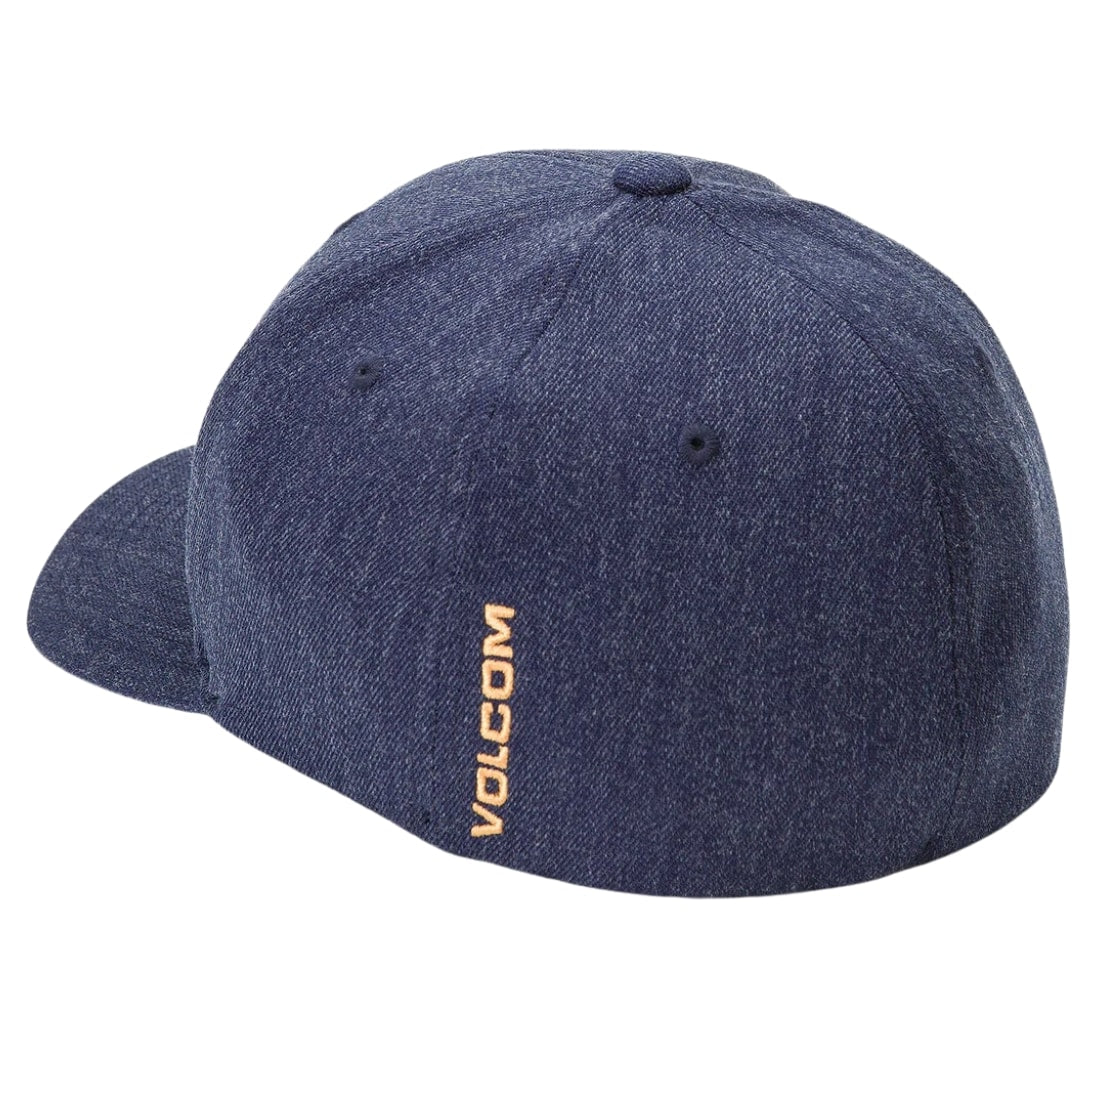 Volcom Full Stone Hthr Flexfit Hat Cap - Navy Heather